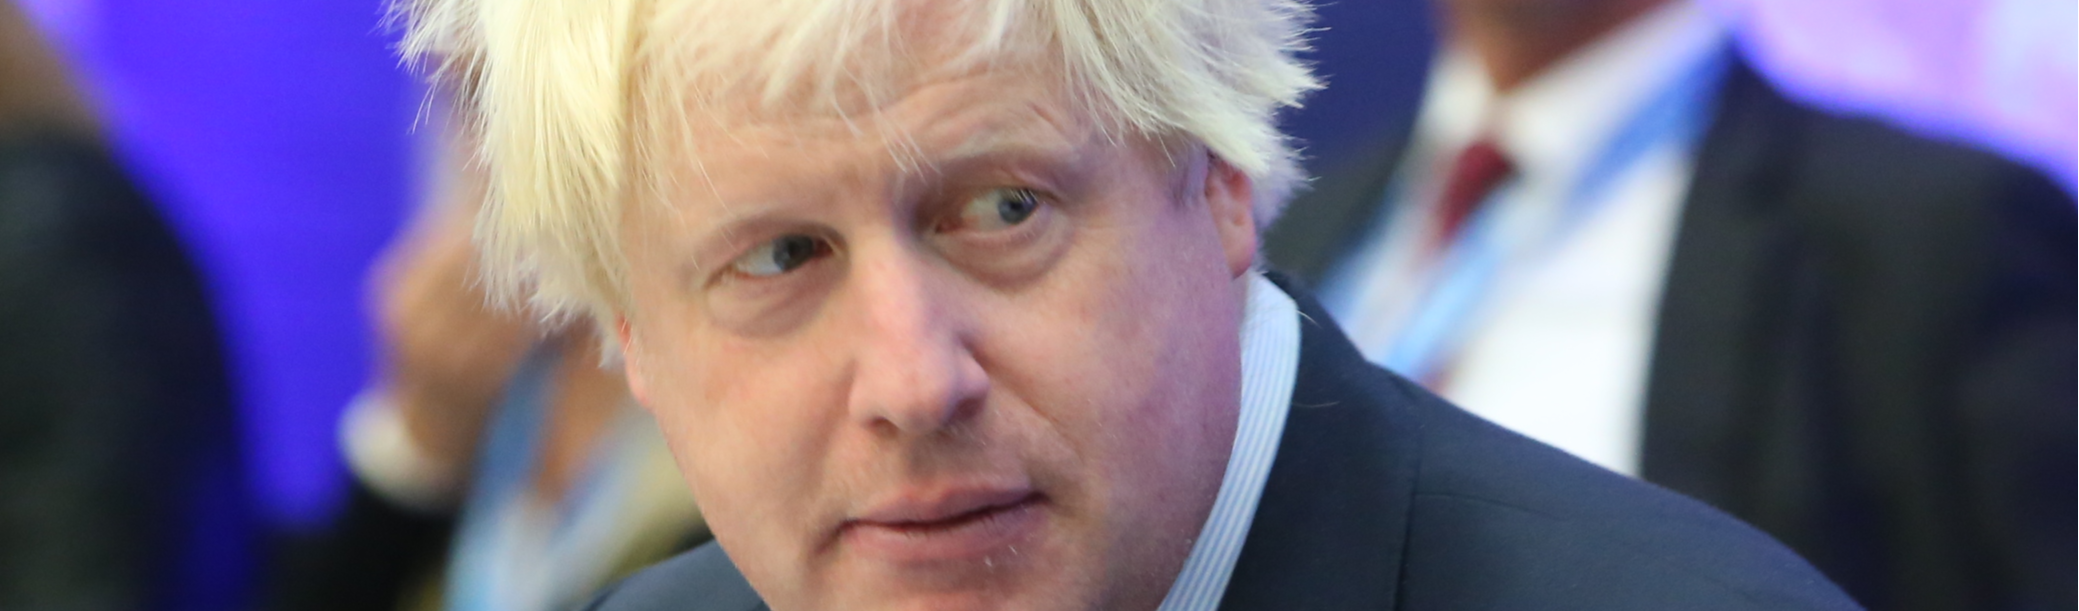 Parlamento britânico impõe sexta derrota consecutiva ao primeiro ministro Boris Johnson